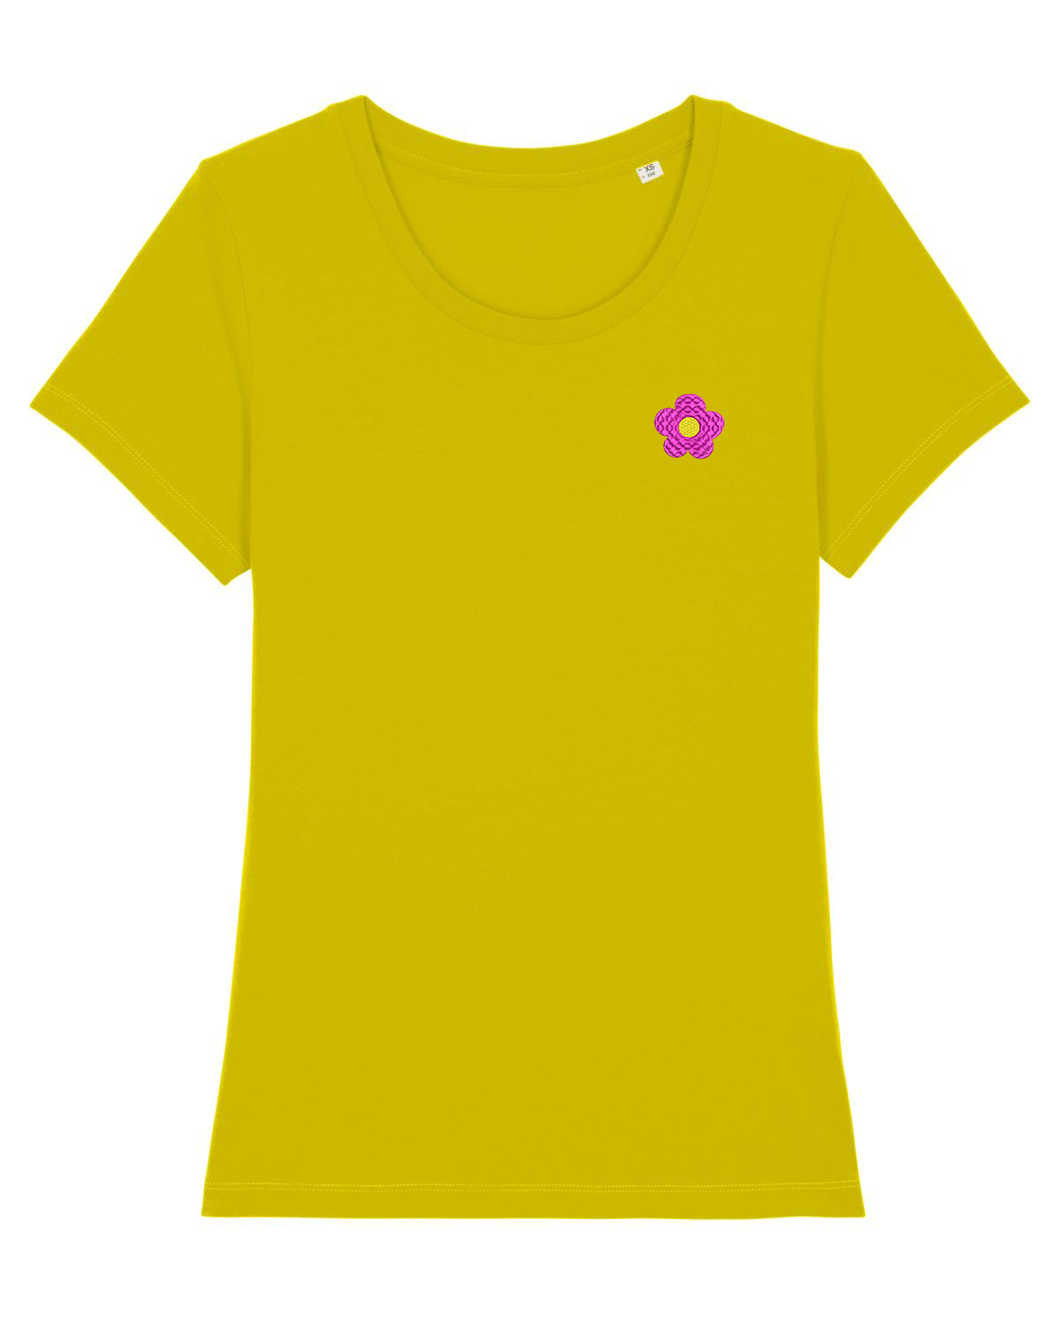 flower 🌸 - Embroidered women's t-shirt